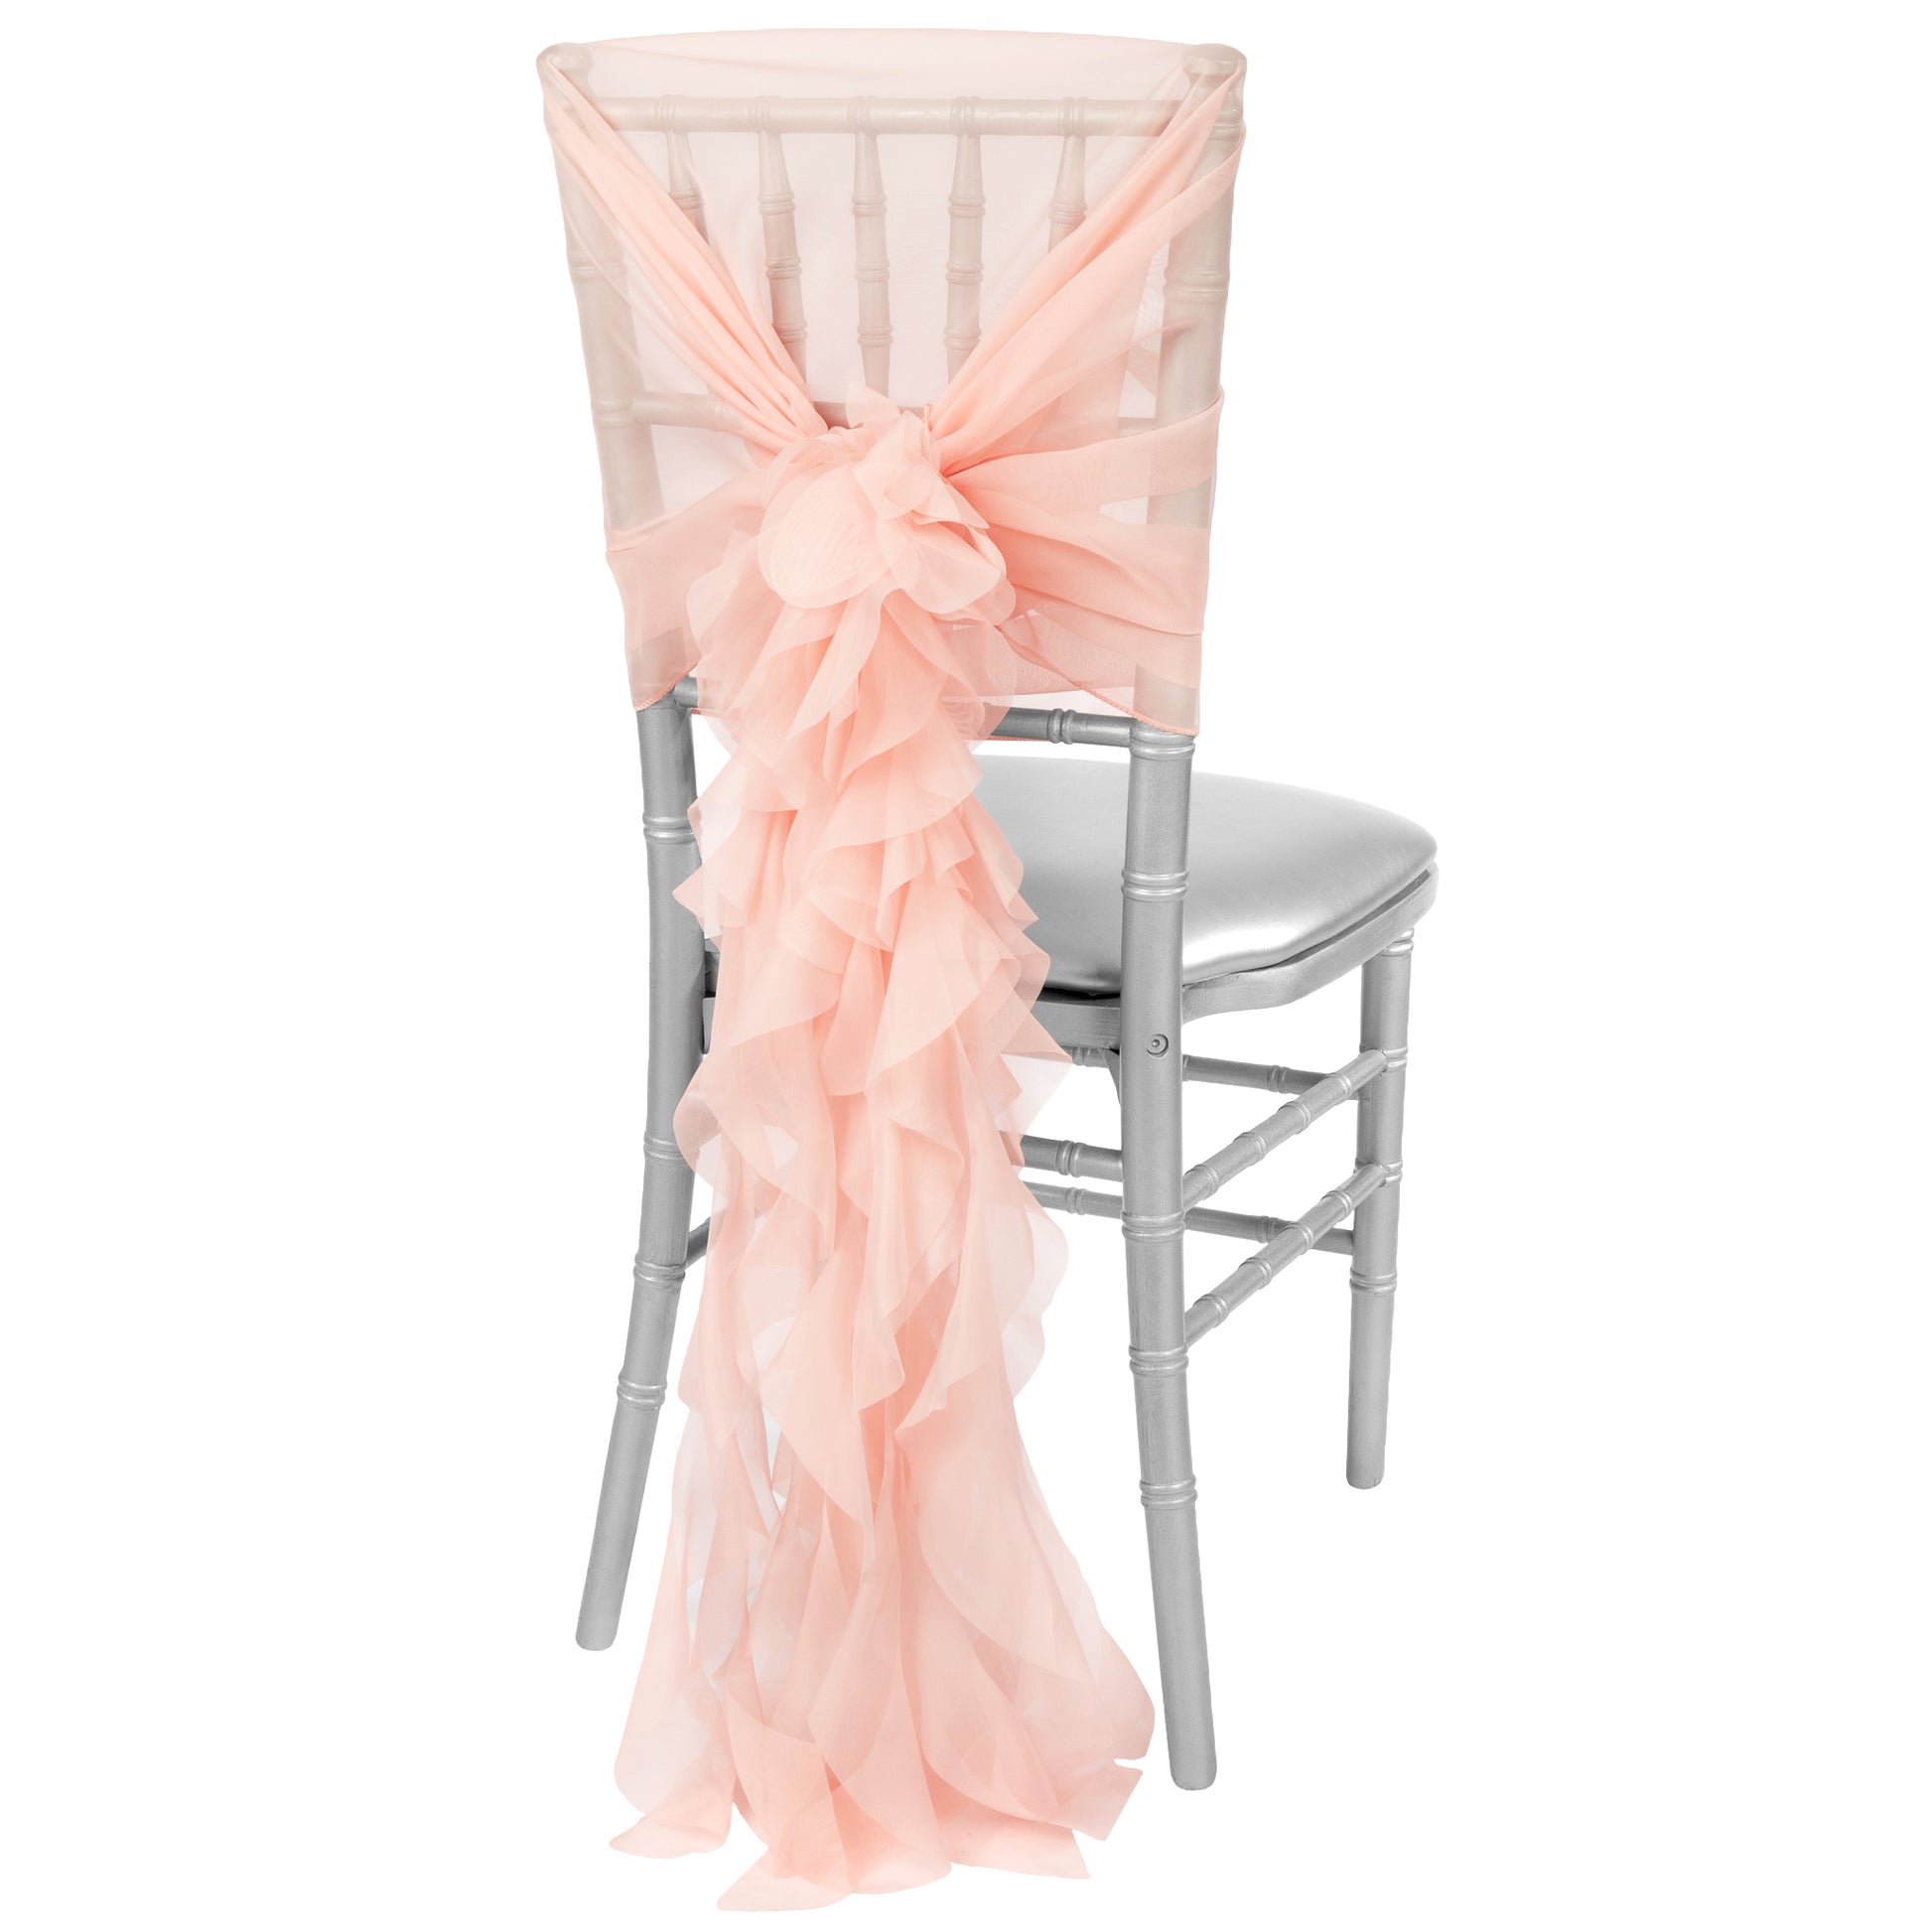 1 Set of Soft Curly Willow Ruffles Chair Sash & Cap - Blush/Rose Gold - CV Linens